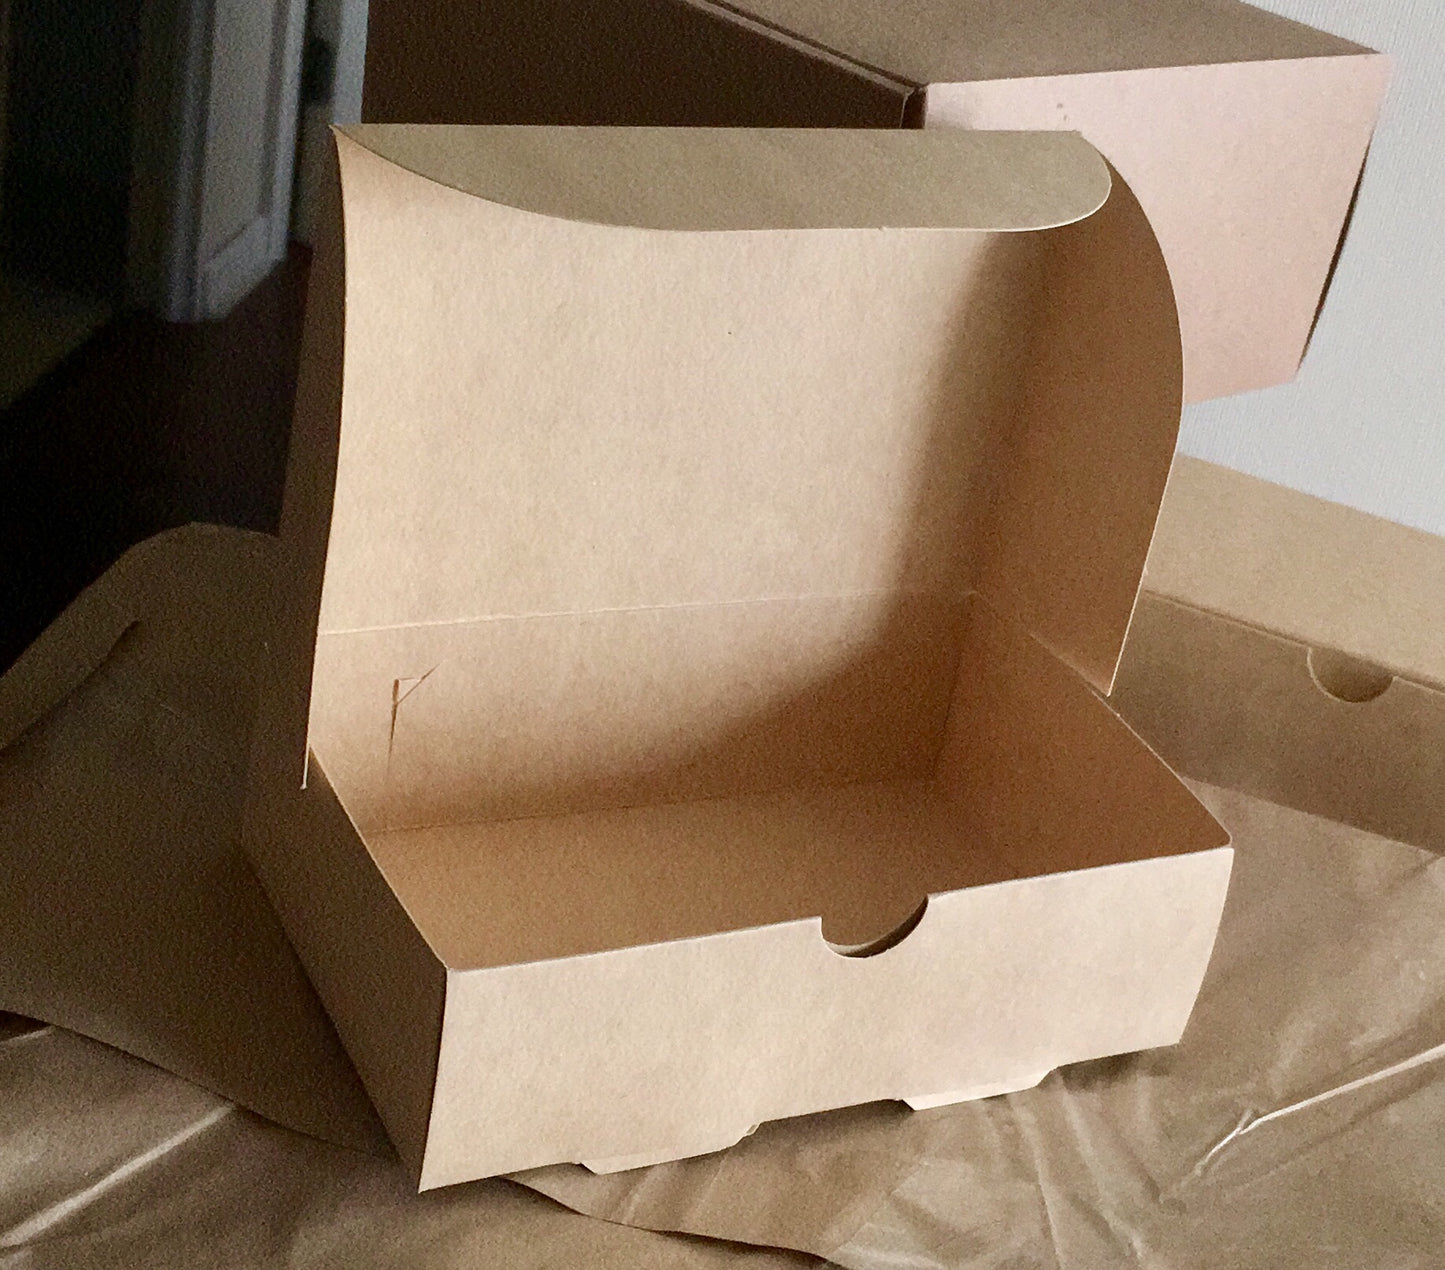 Caja Kraft rectangular - Desechables Chiguayante